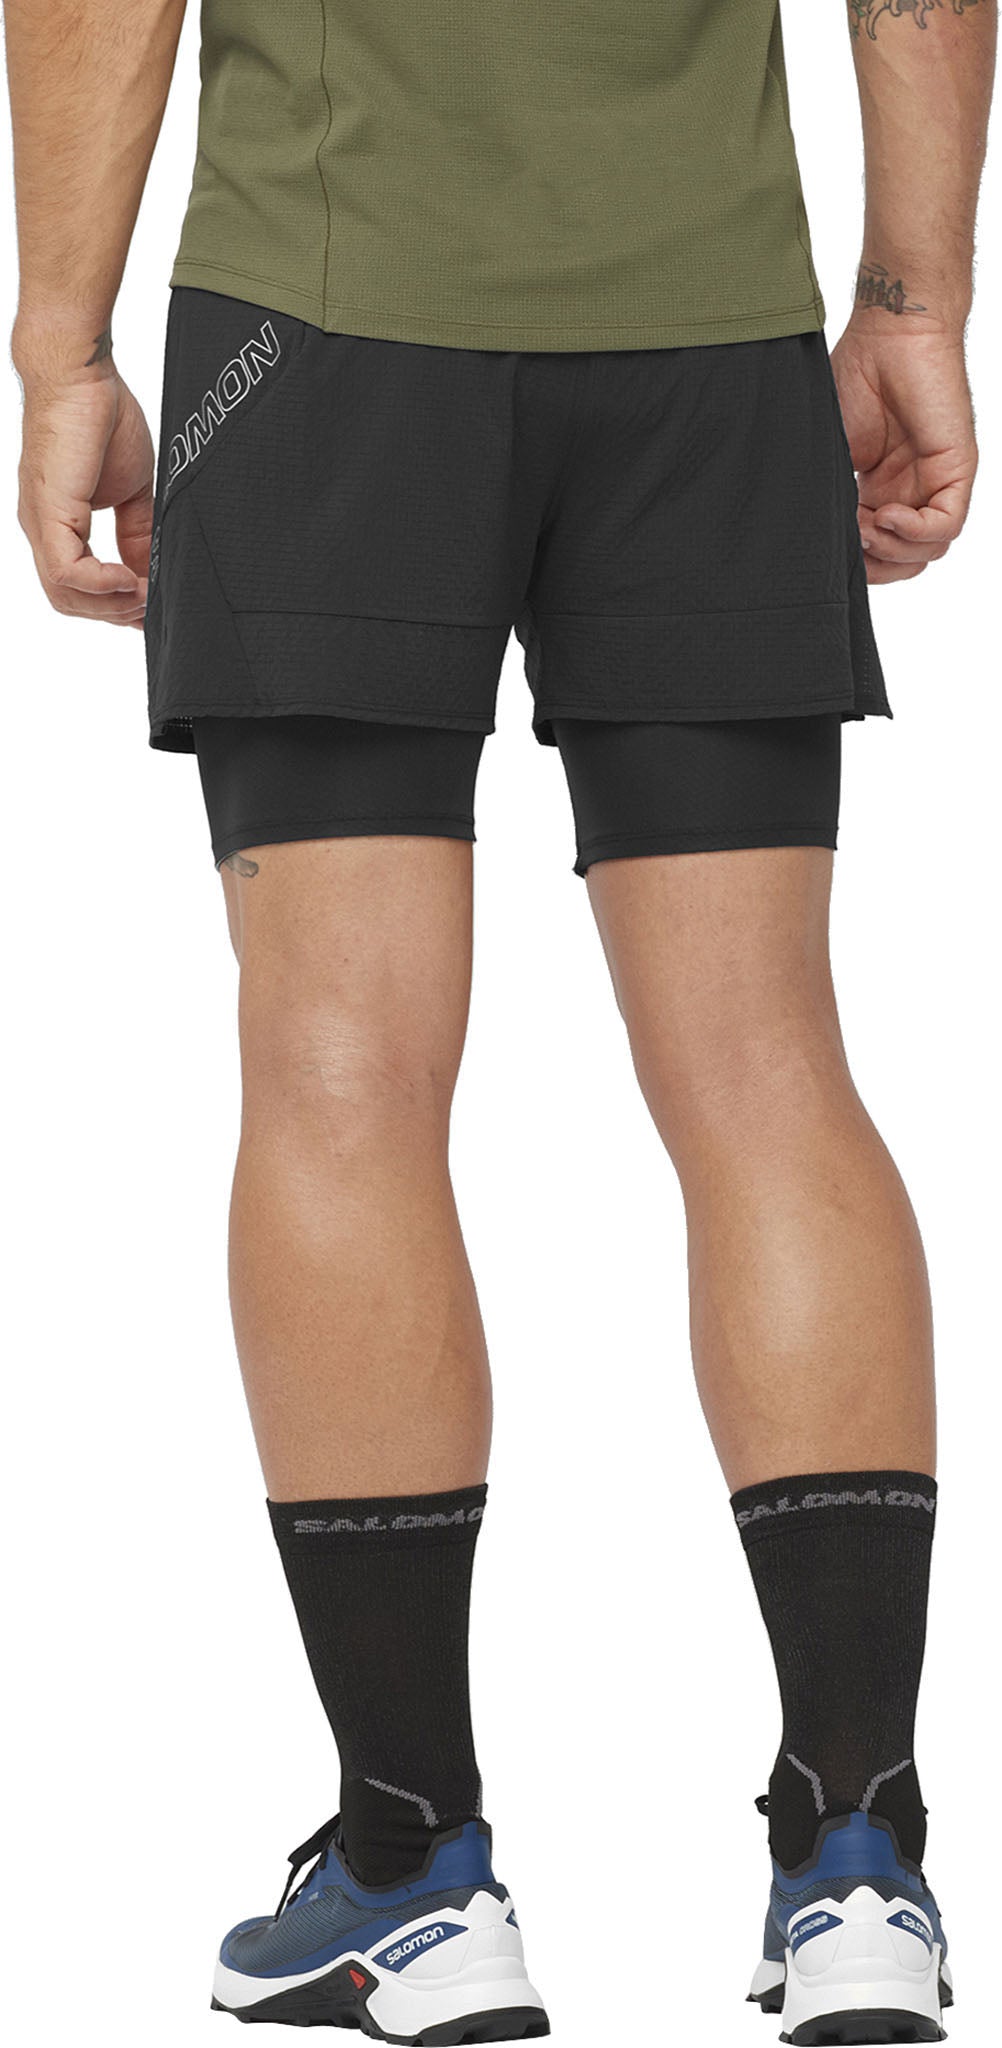 Salomon Sense Aero 2-In-1 Shorts - Men's